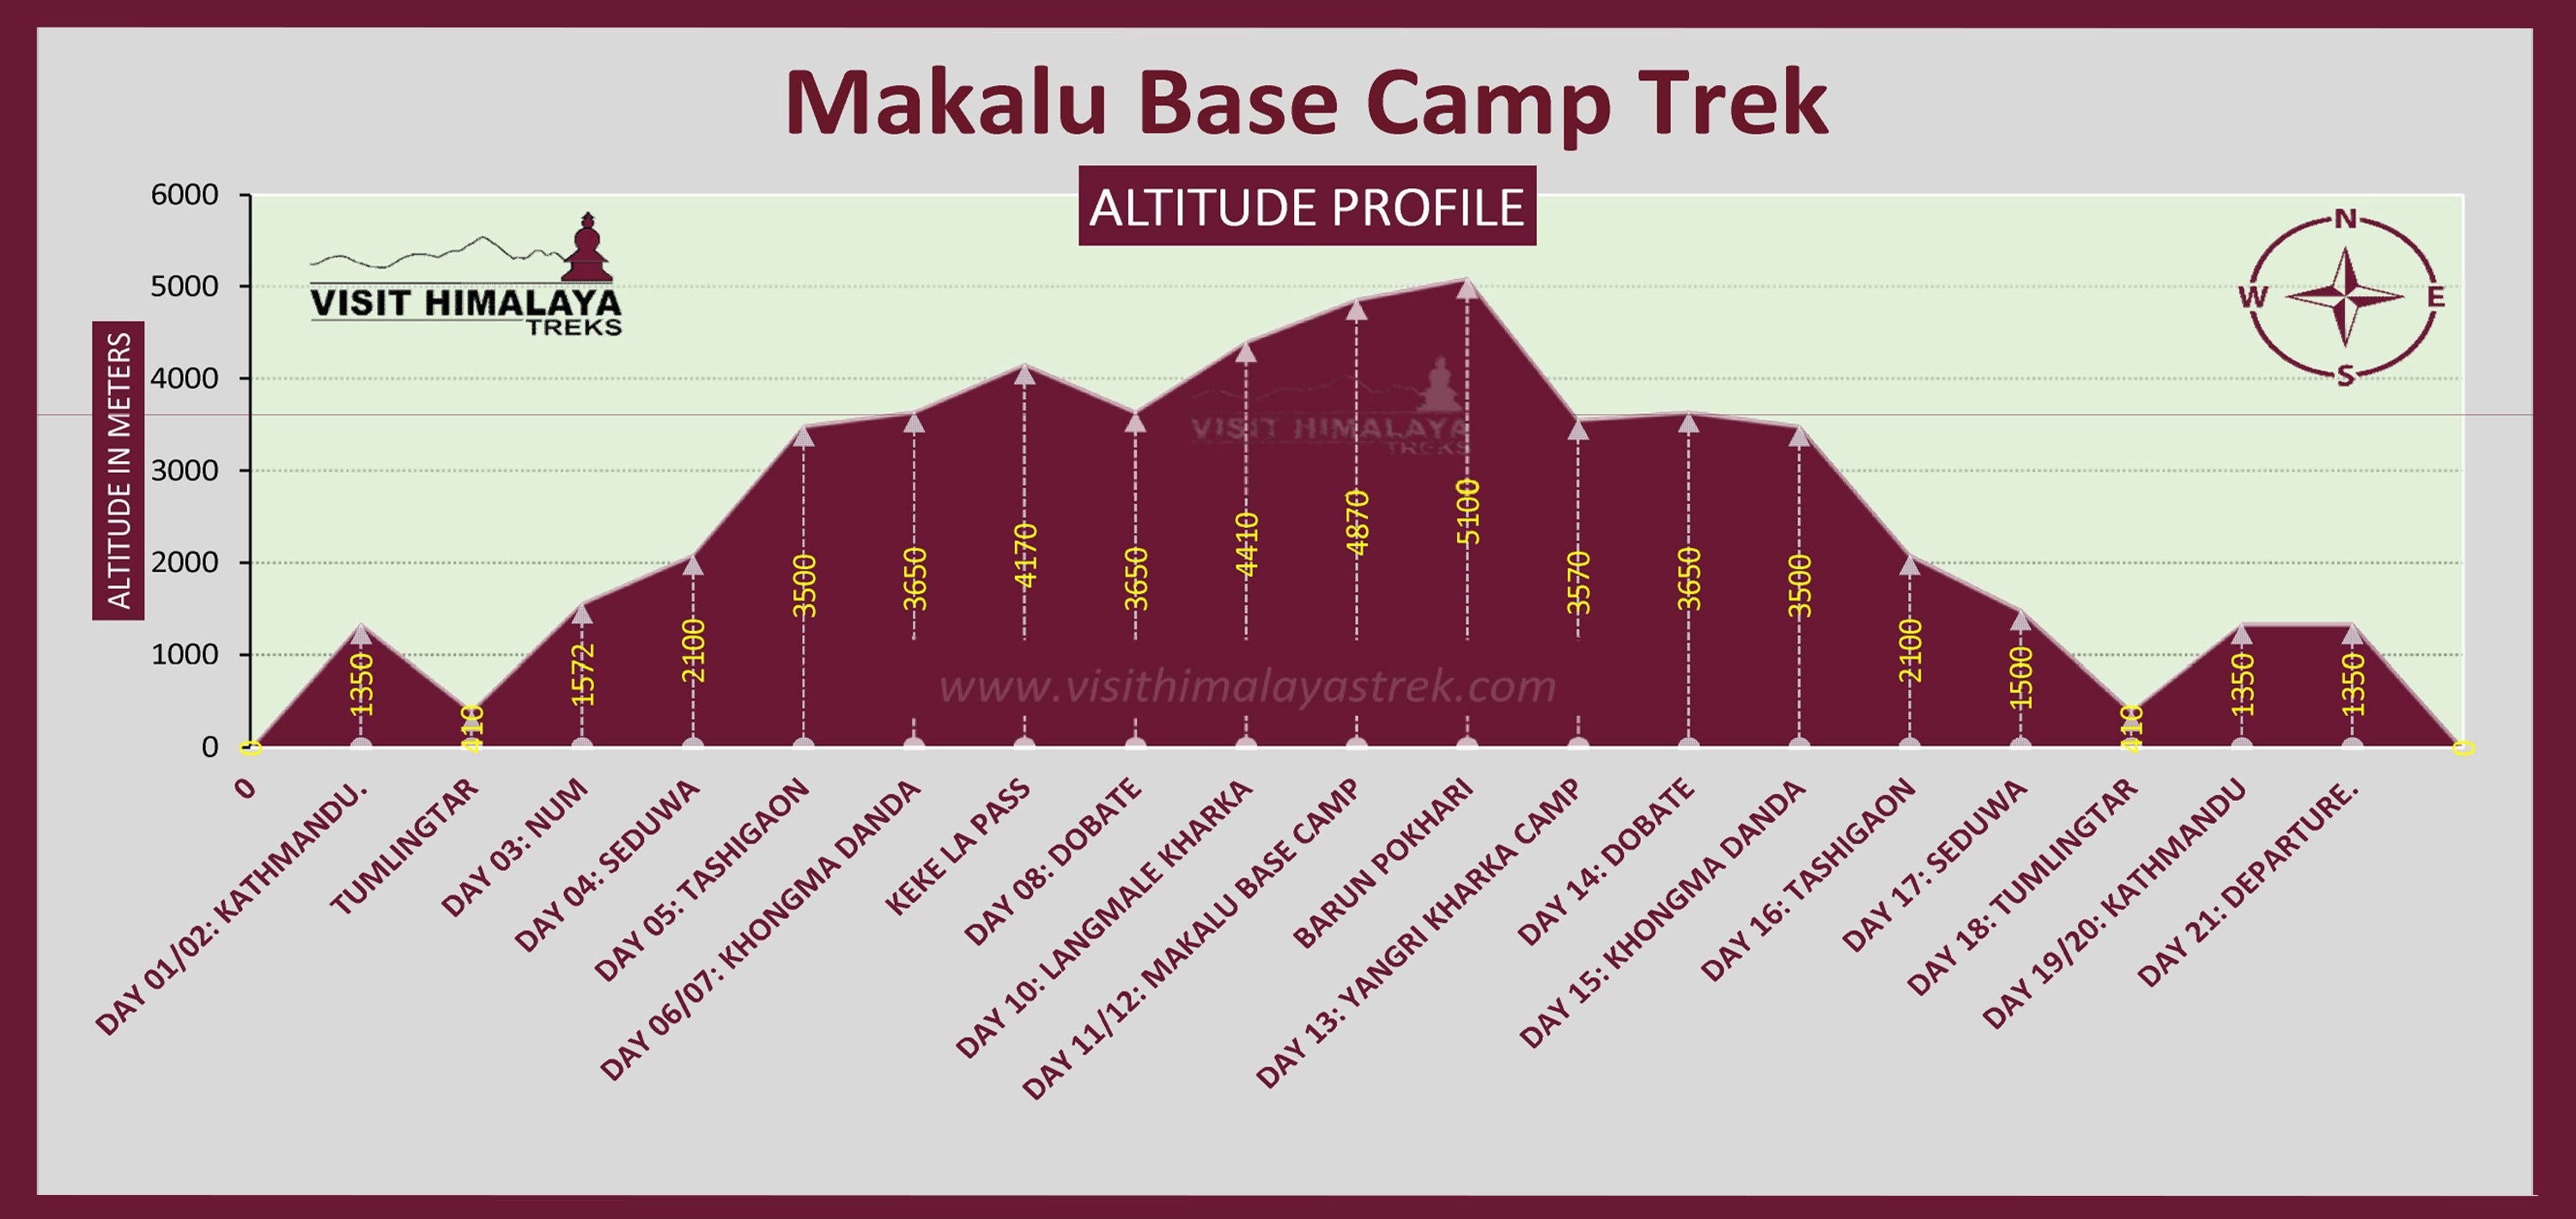 Makalu Base Camp Trek's Altitude Profile